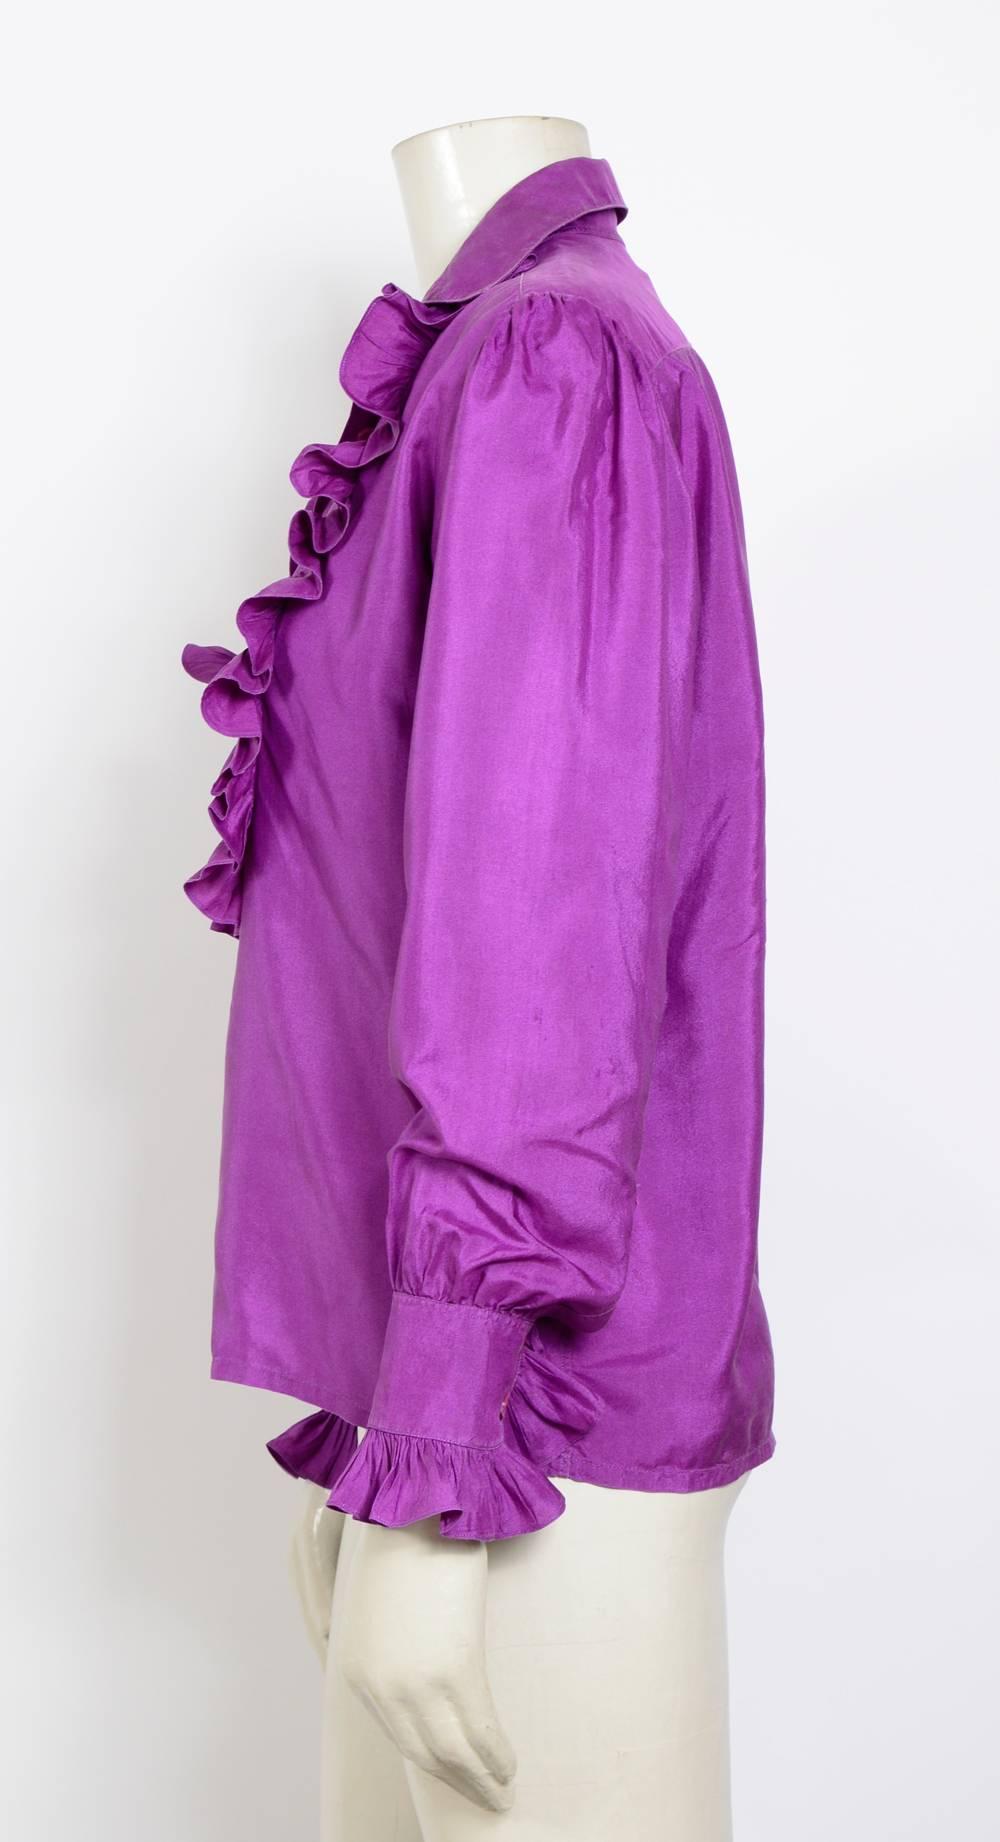 Lovely ruffle silk shirt by Yves Saint Laurent.
Measurements are taken flat: 
Sh to Sh 15inch/38cm - Ua to Ua 20inch/51cm(x2) - Waist 20inch/51cm(x2) - Sleeve 22inch/56cm - Total Length 24inch/61cm 